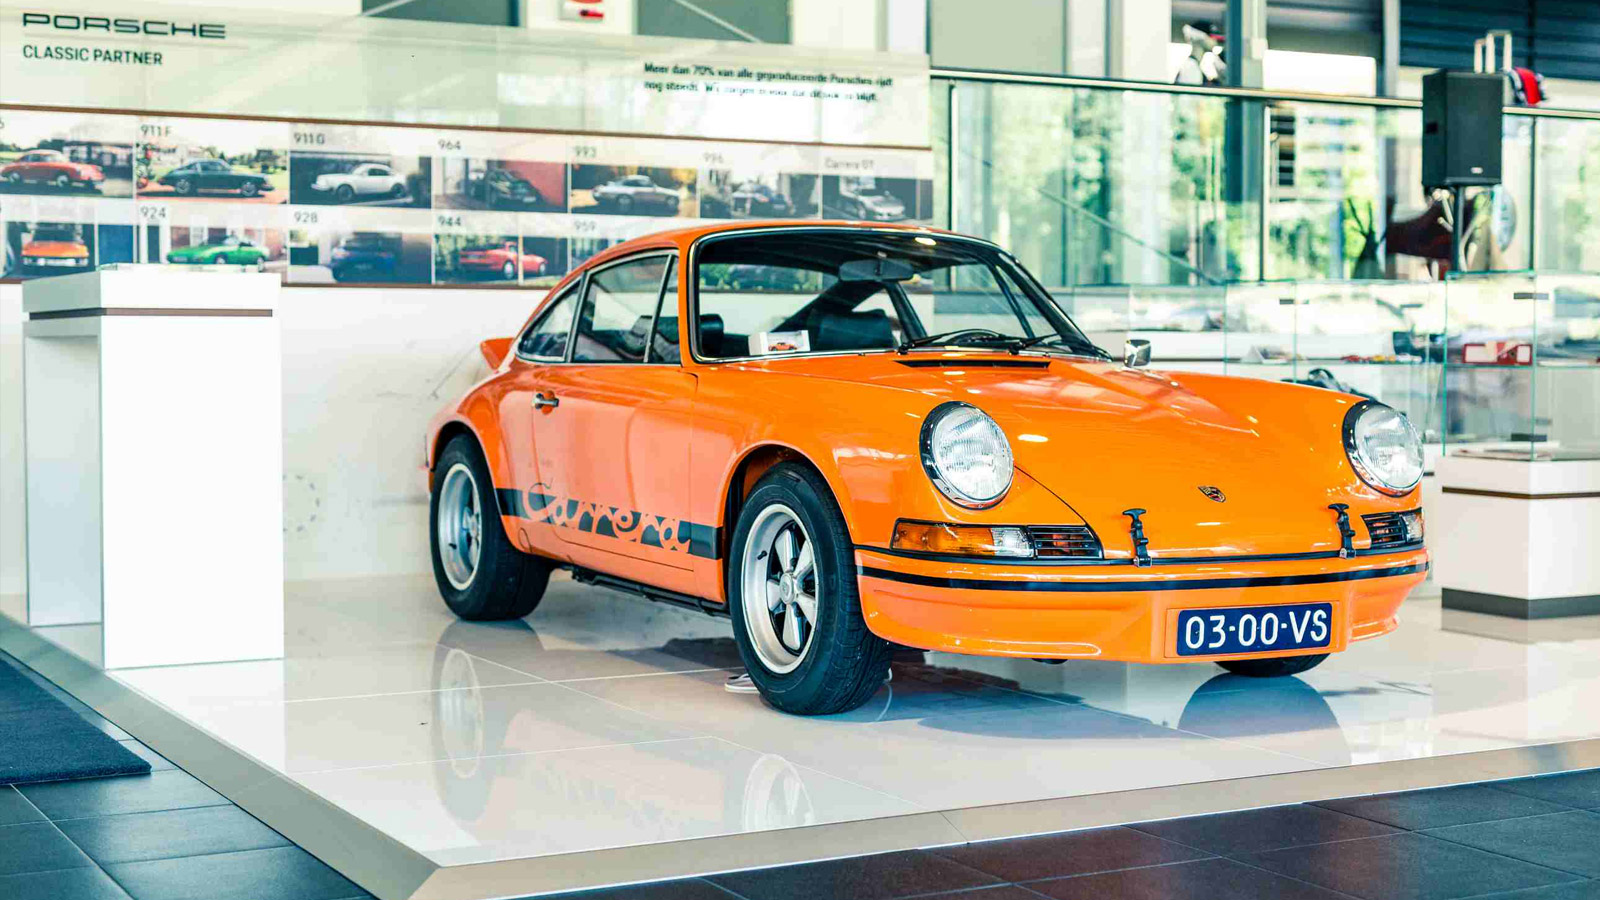 Porsche Centrum Leusden